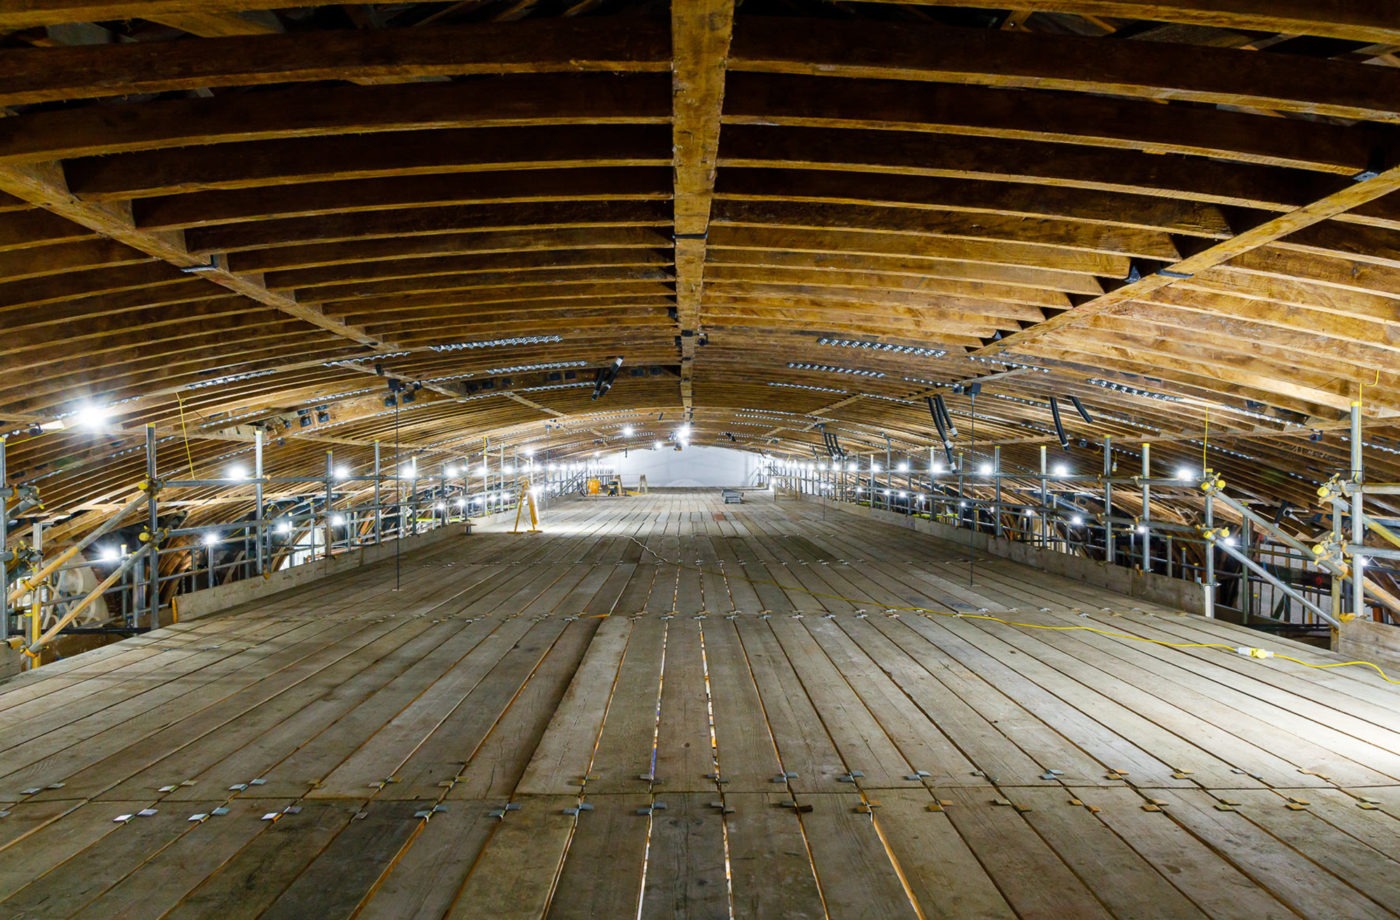 Brighton Dome Corn Exchange roof during restoration